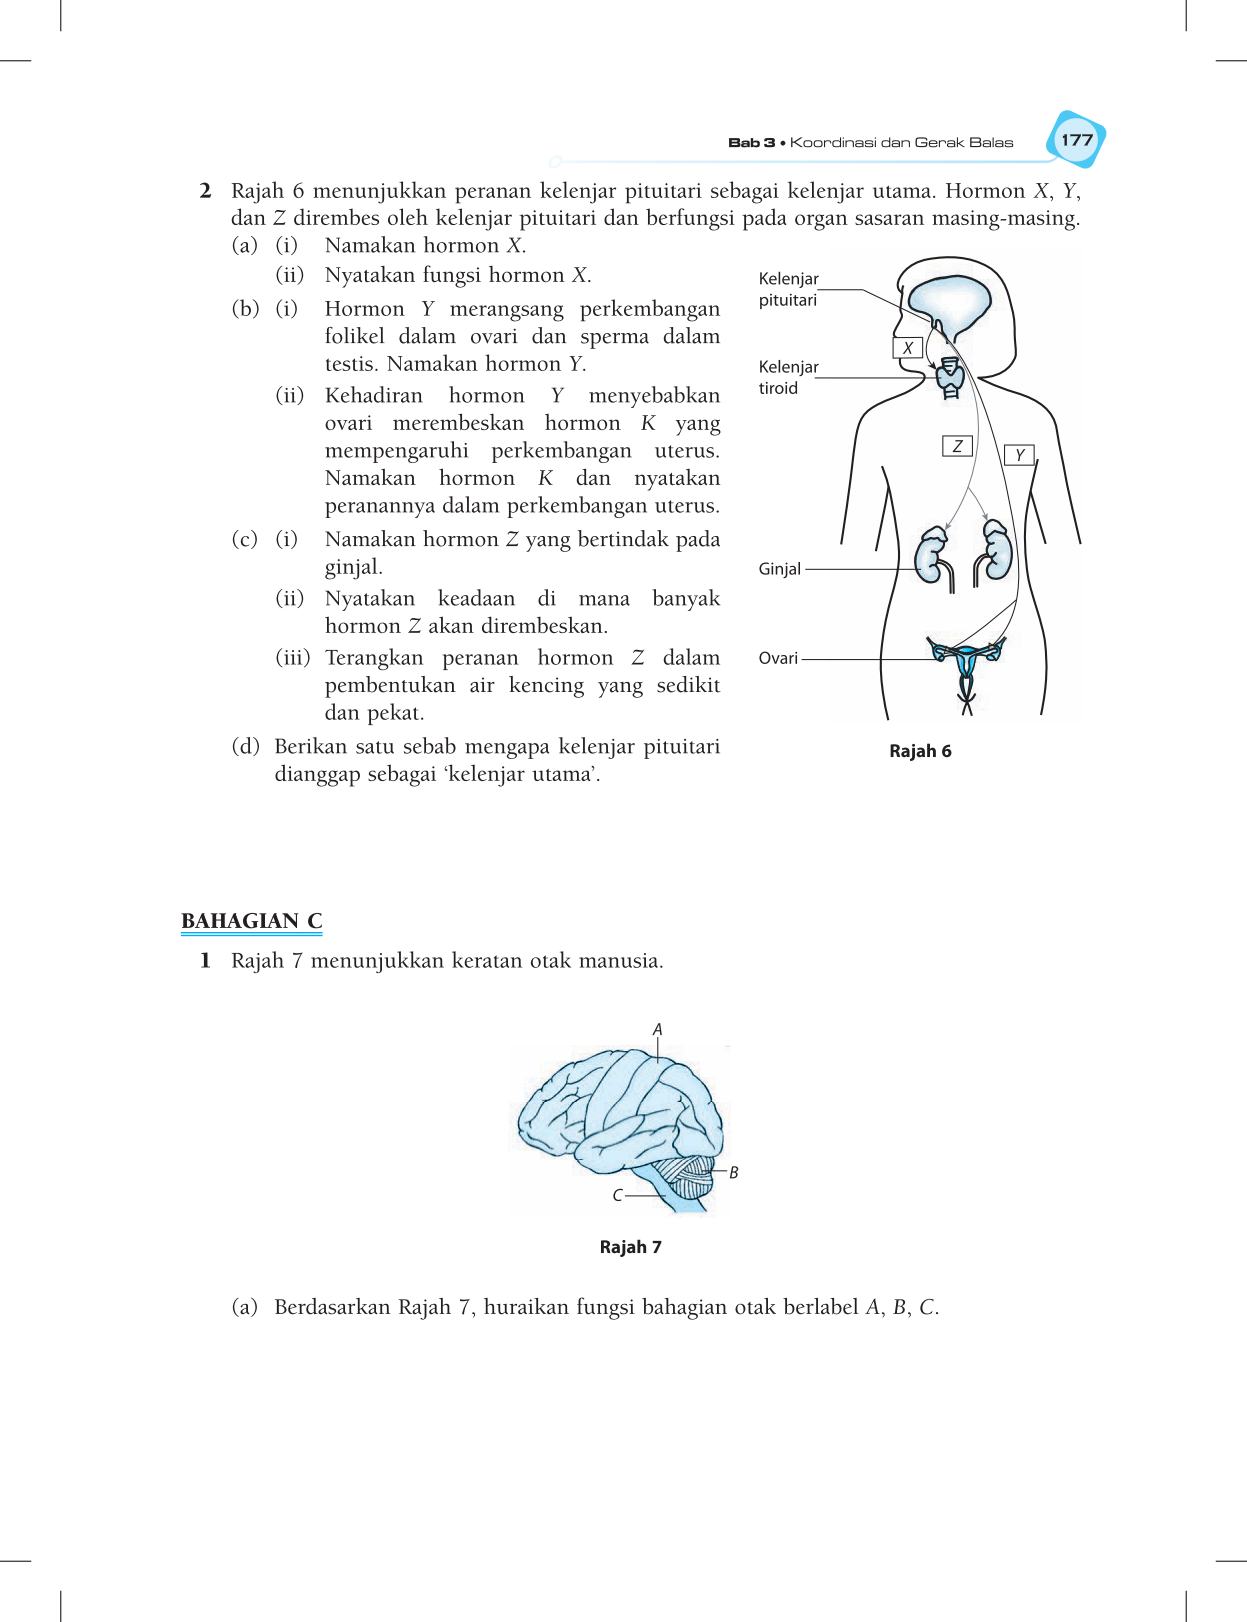 T5 : Biology TB BM Page189